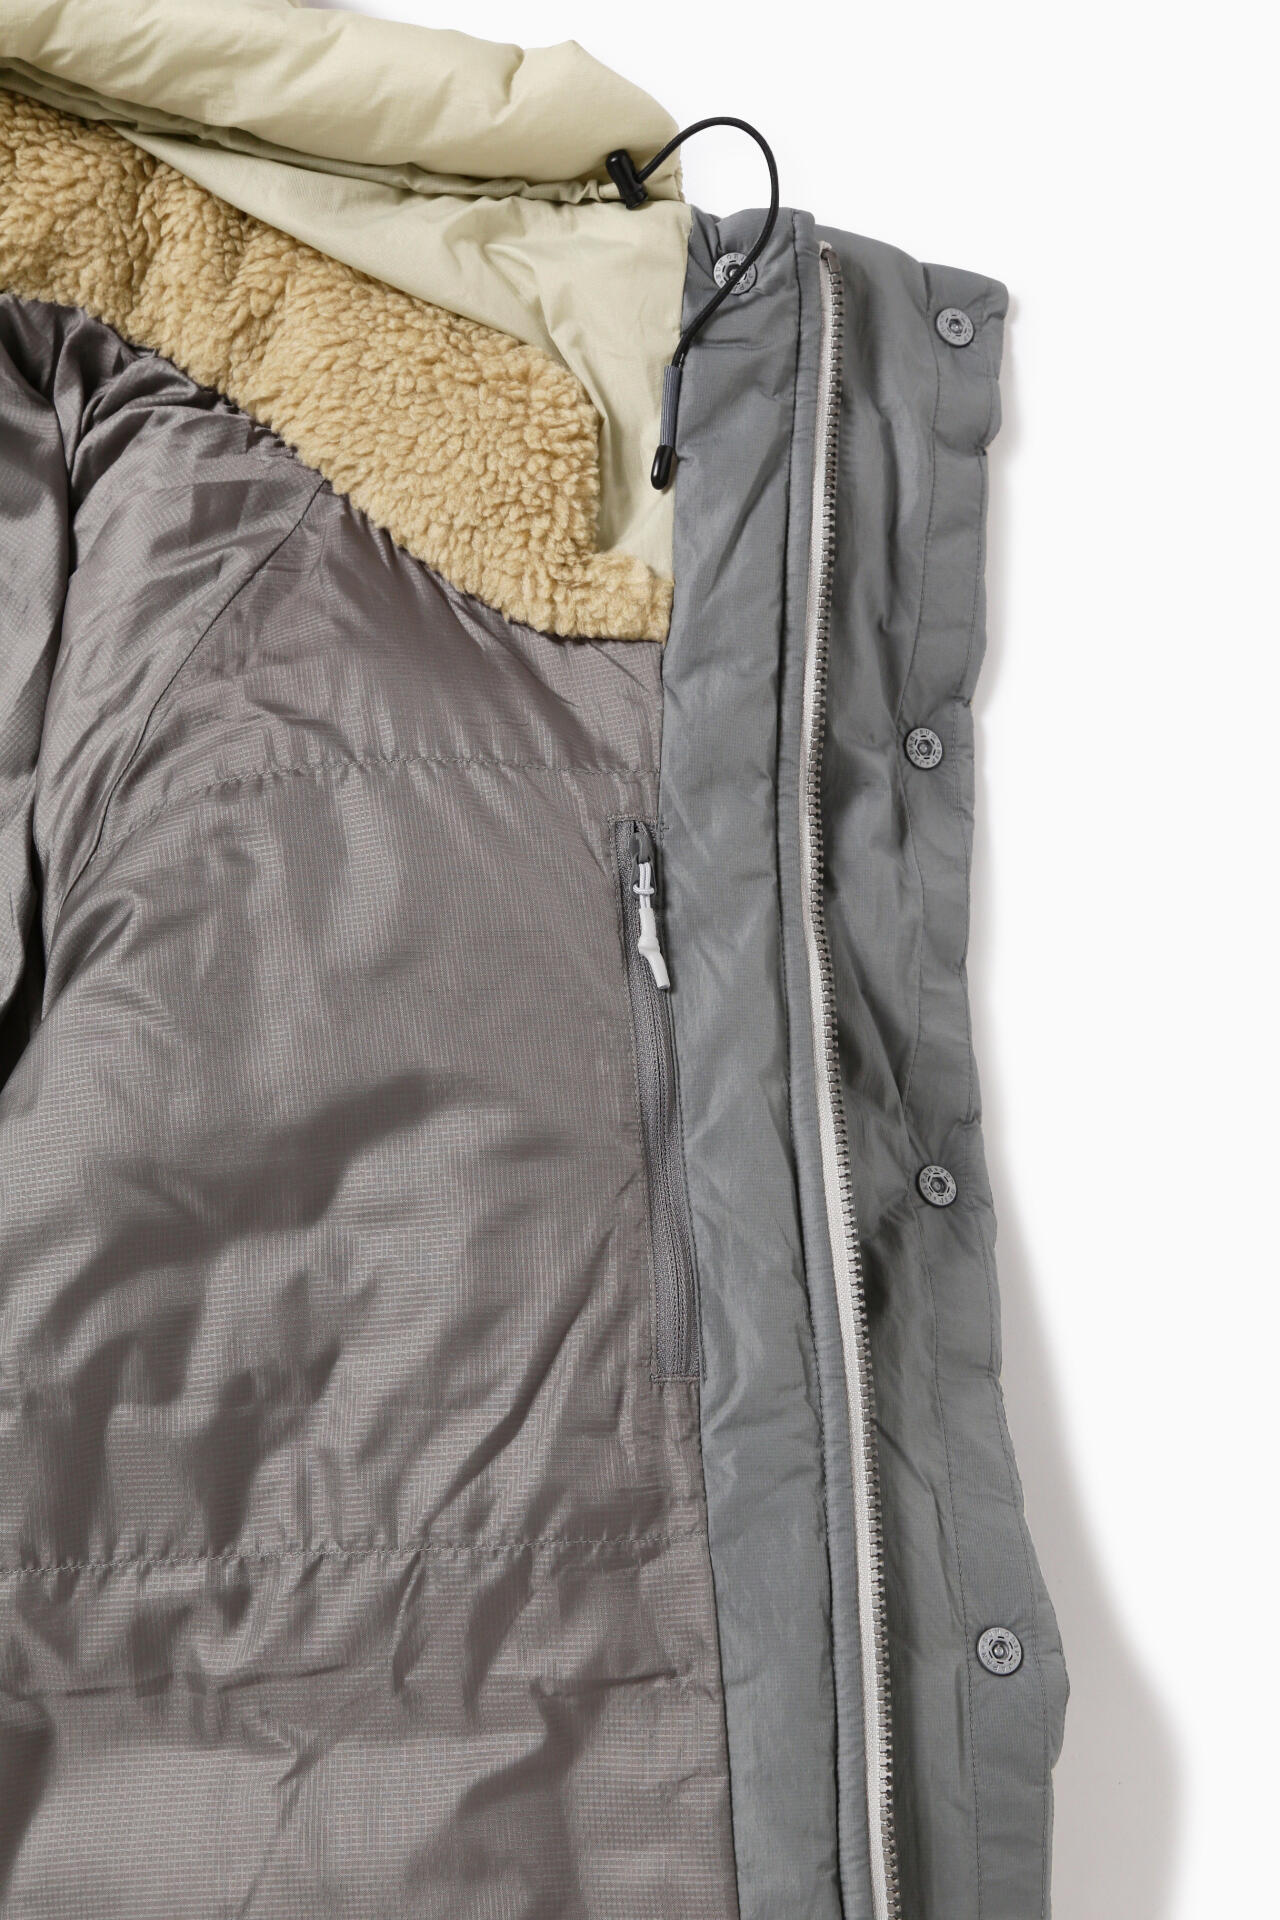 MAISON KITSUNÉ × and wander nordic border insulation jacket